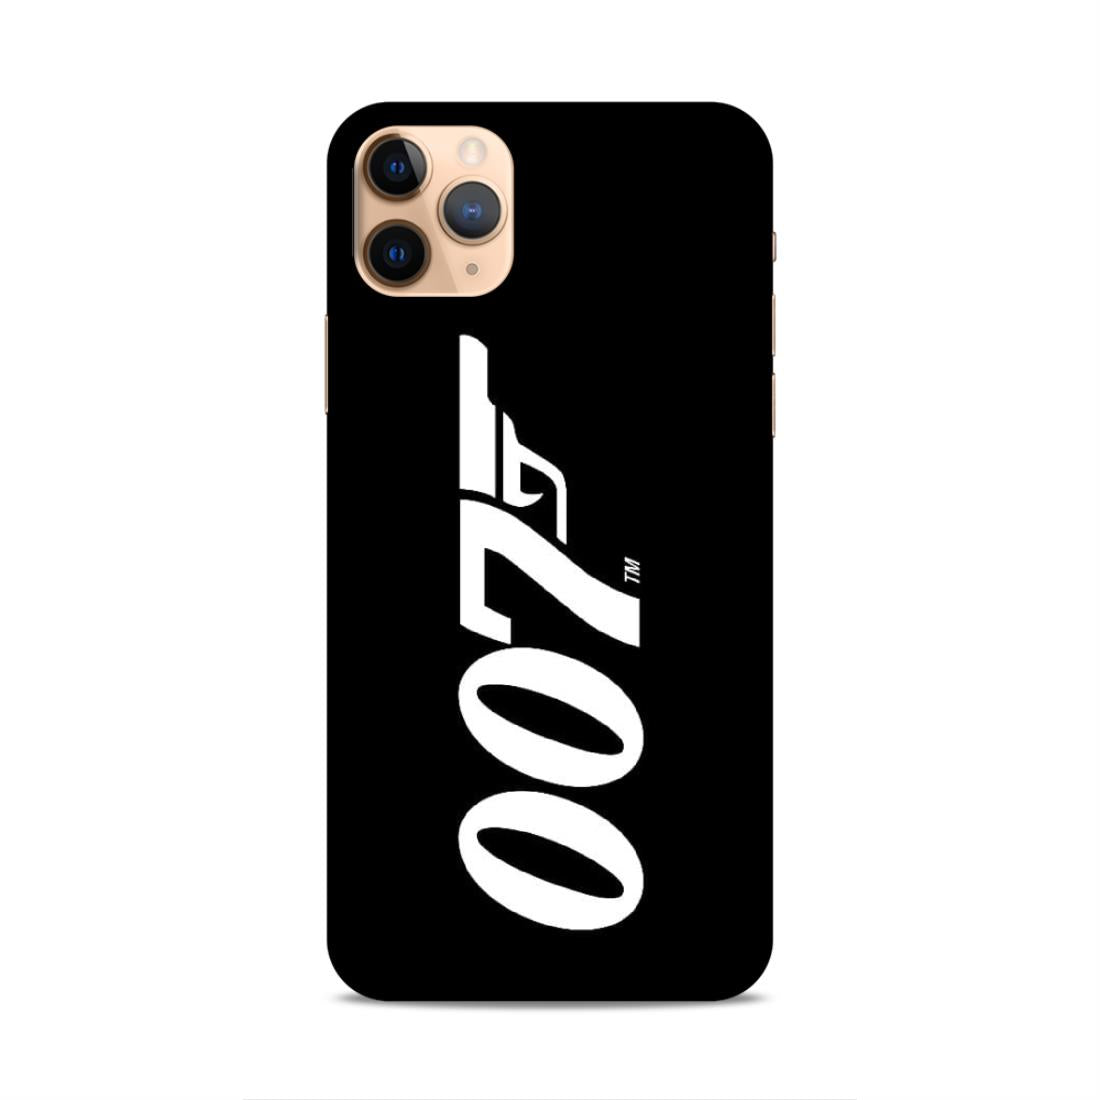 Jems Bond 007 Hard Back Case For Apple iPhone 11 Pro